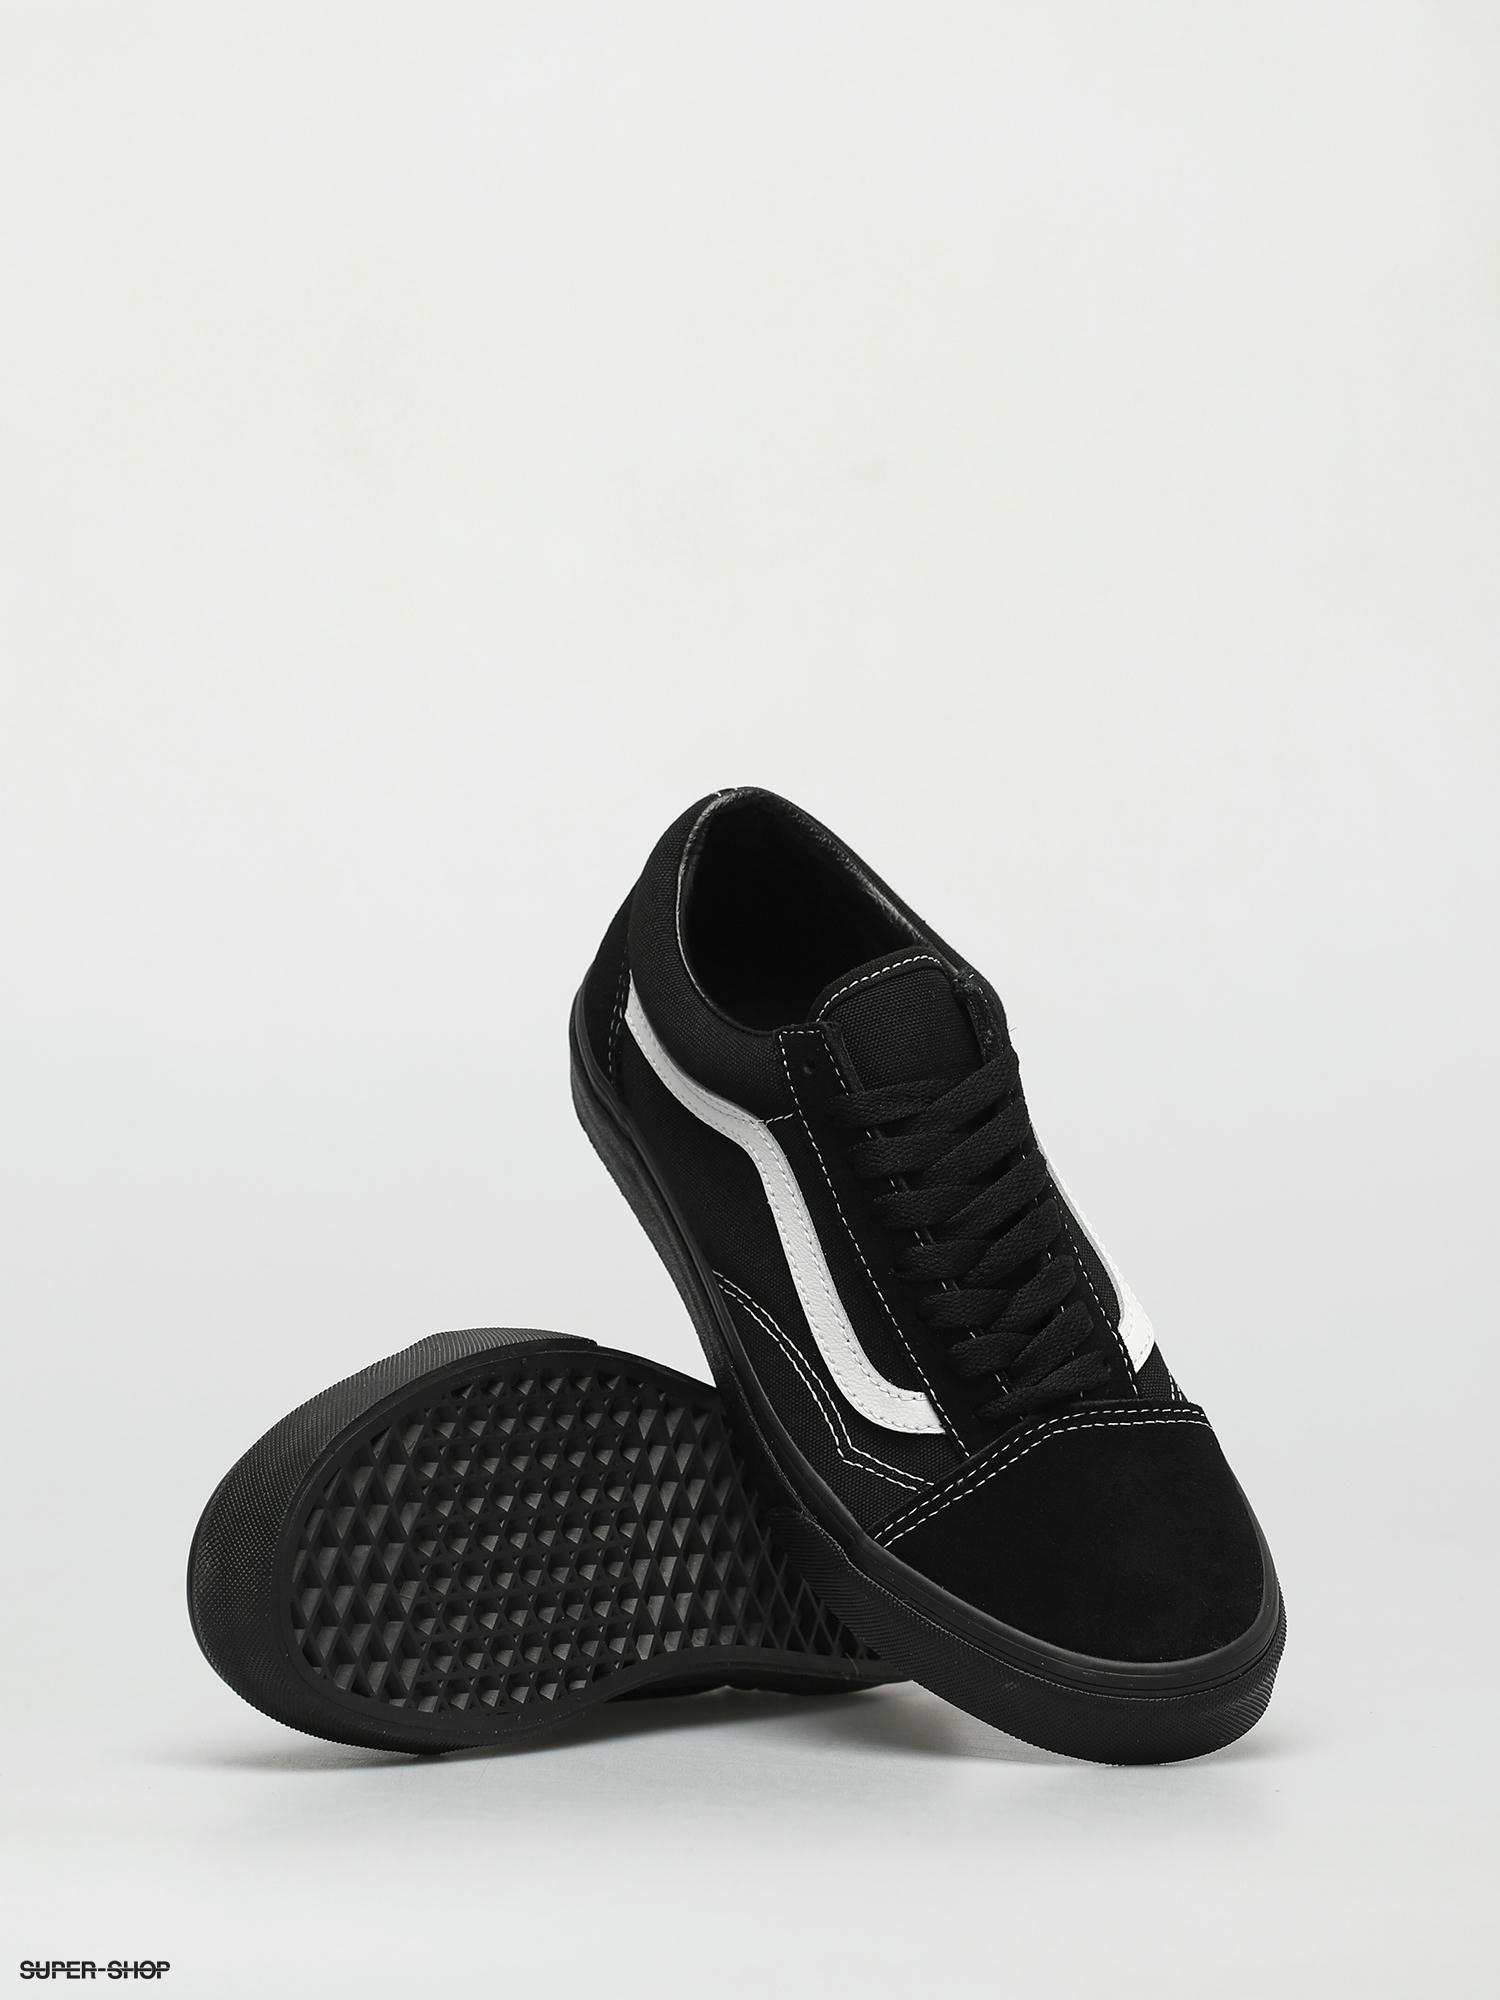 Gutter bungee jump Abundantly Vans Old Skool Shoes (suede/canvas black/black/true white)